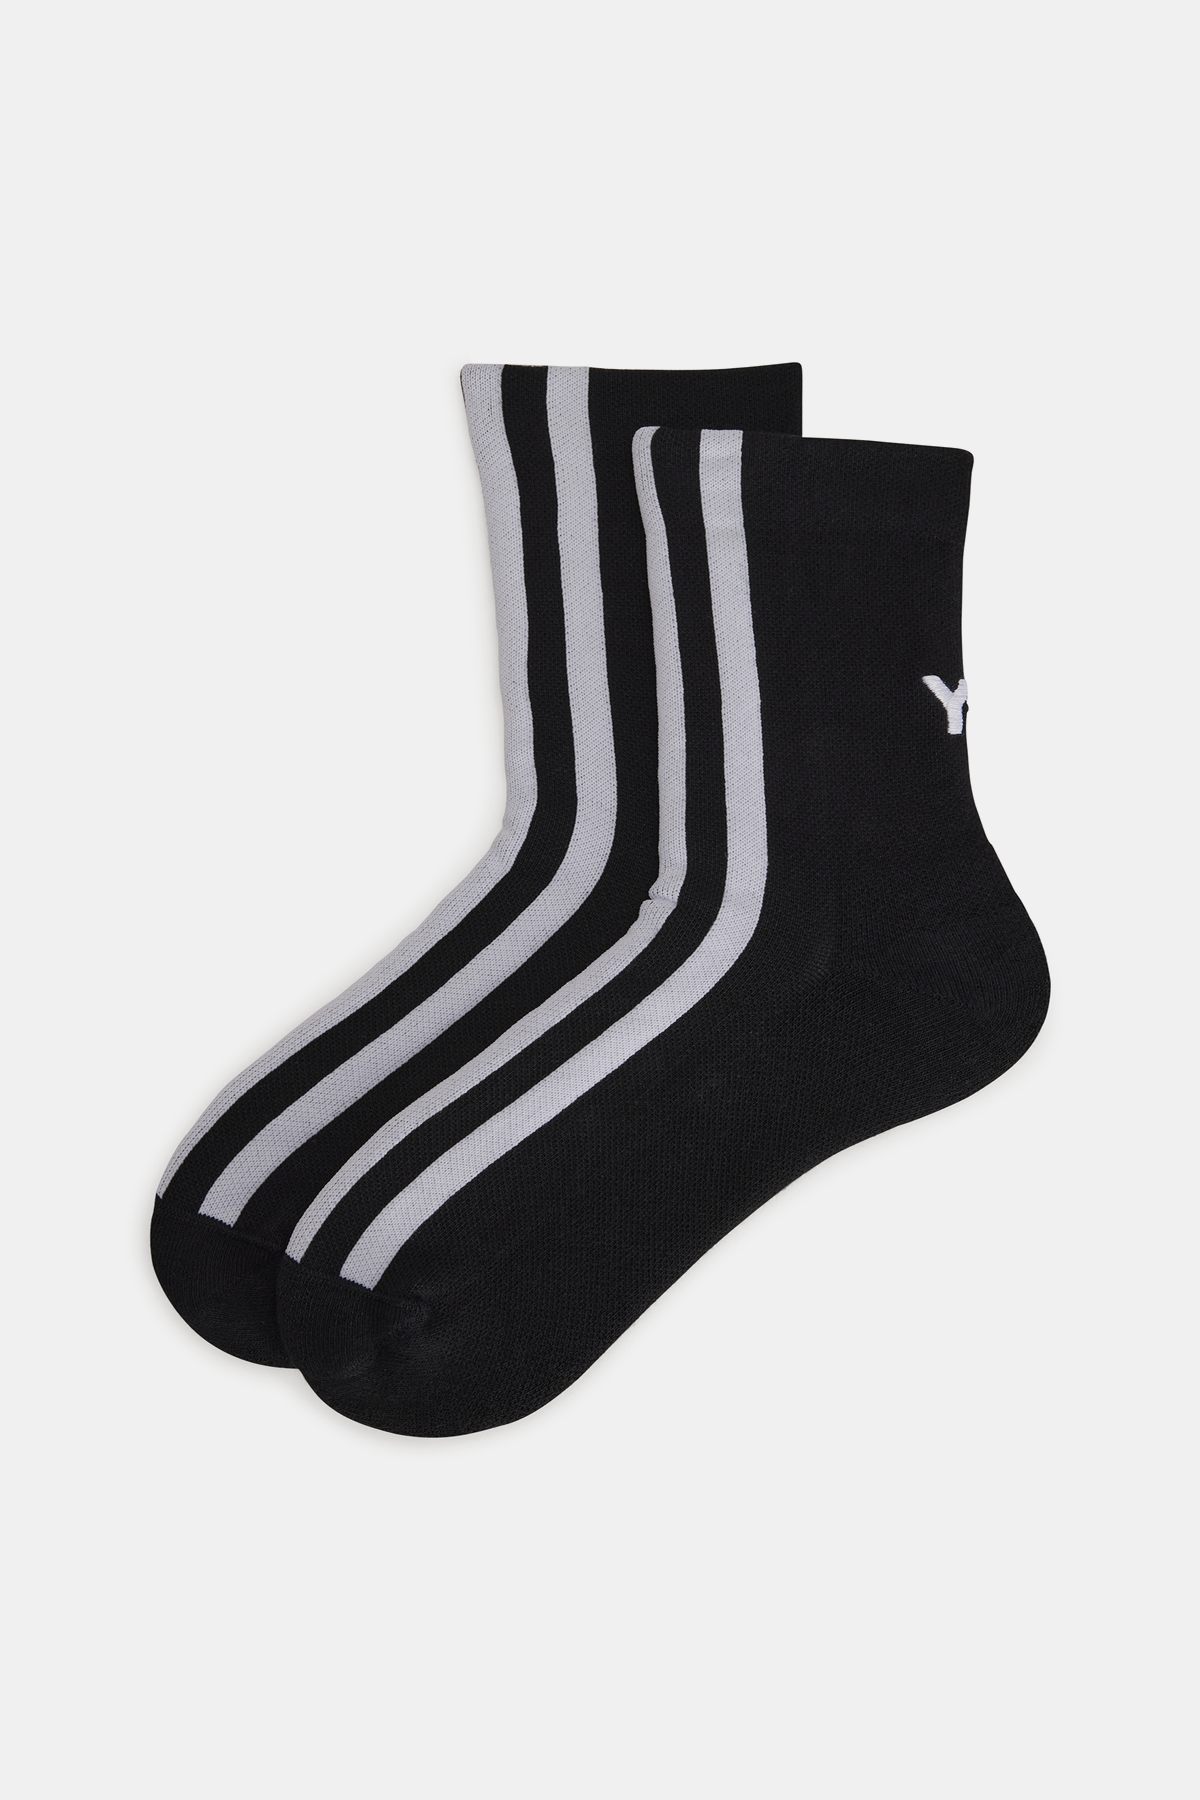 Y-3 Stripes Socks - Black